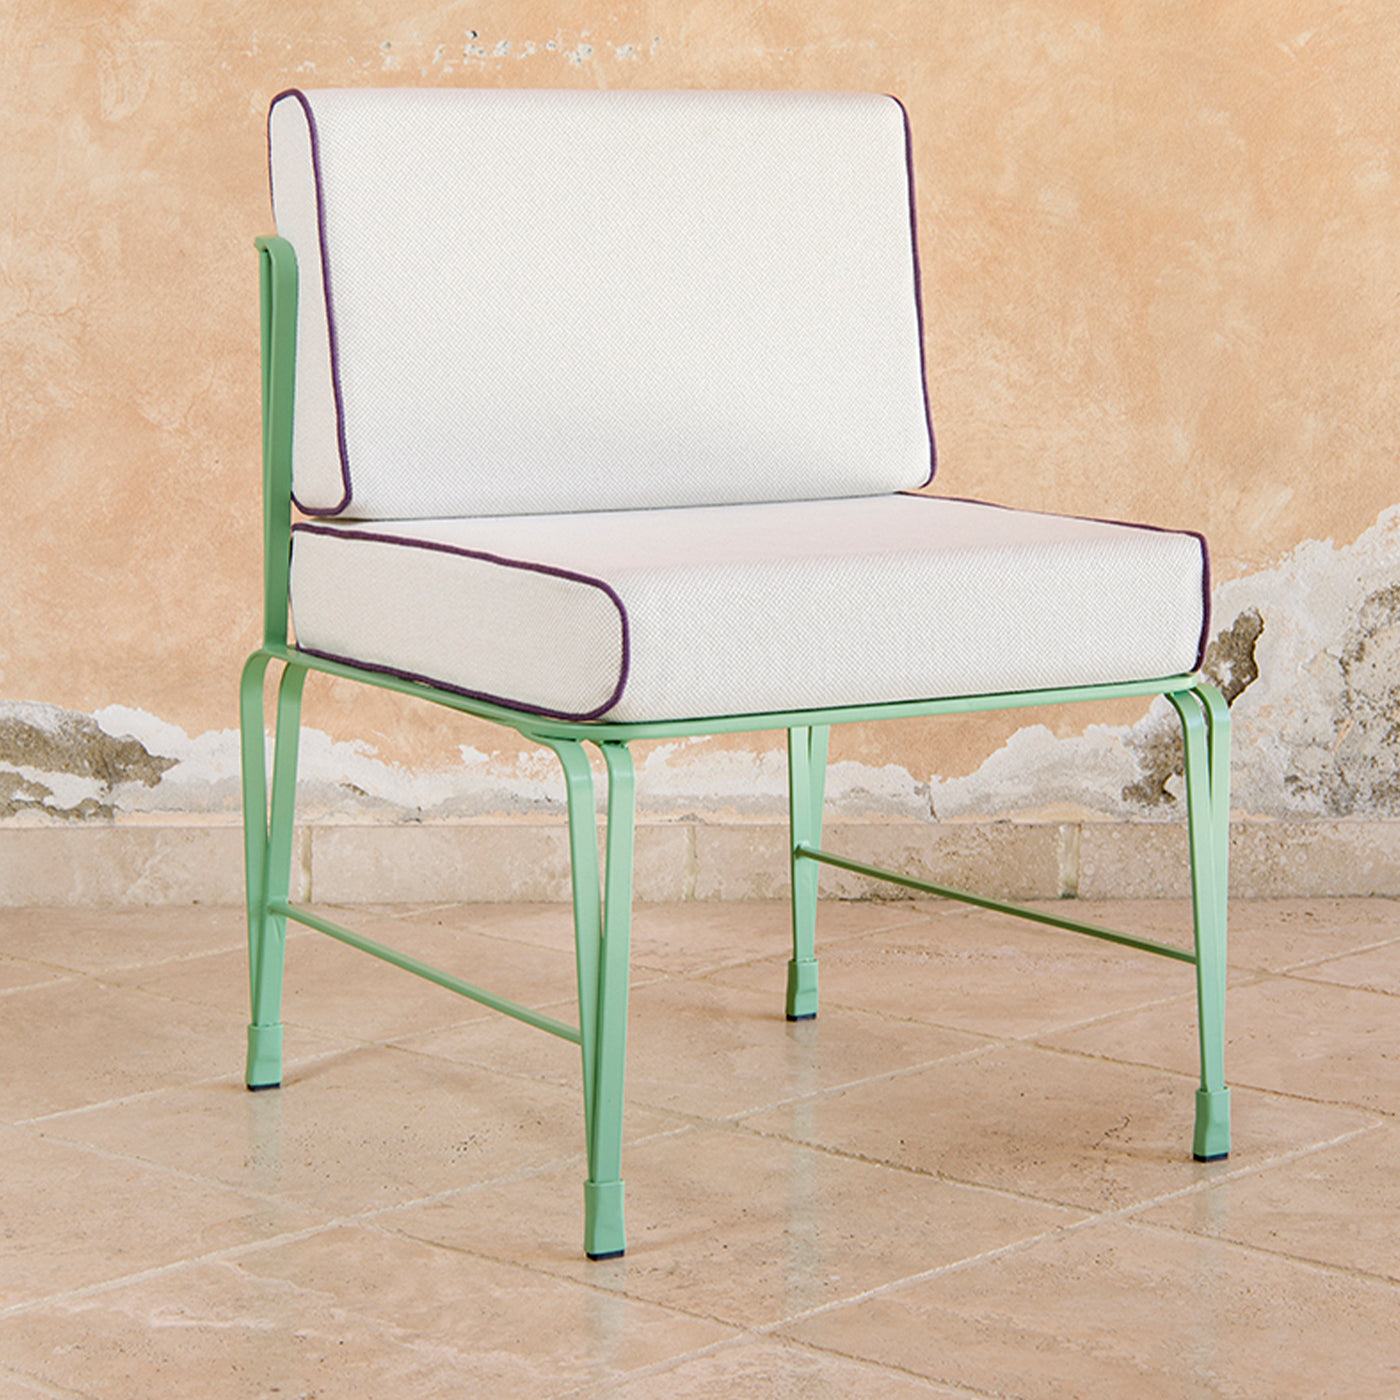 Marina Black Chair by Ciarmoli Queda Studio - Alternative view 4